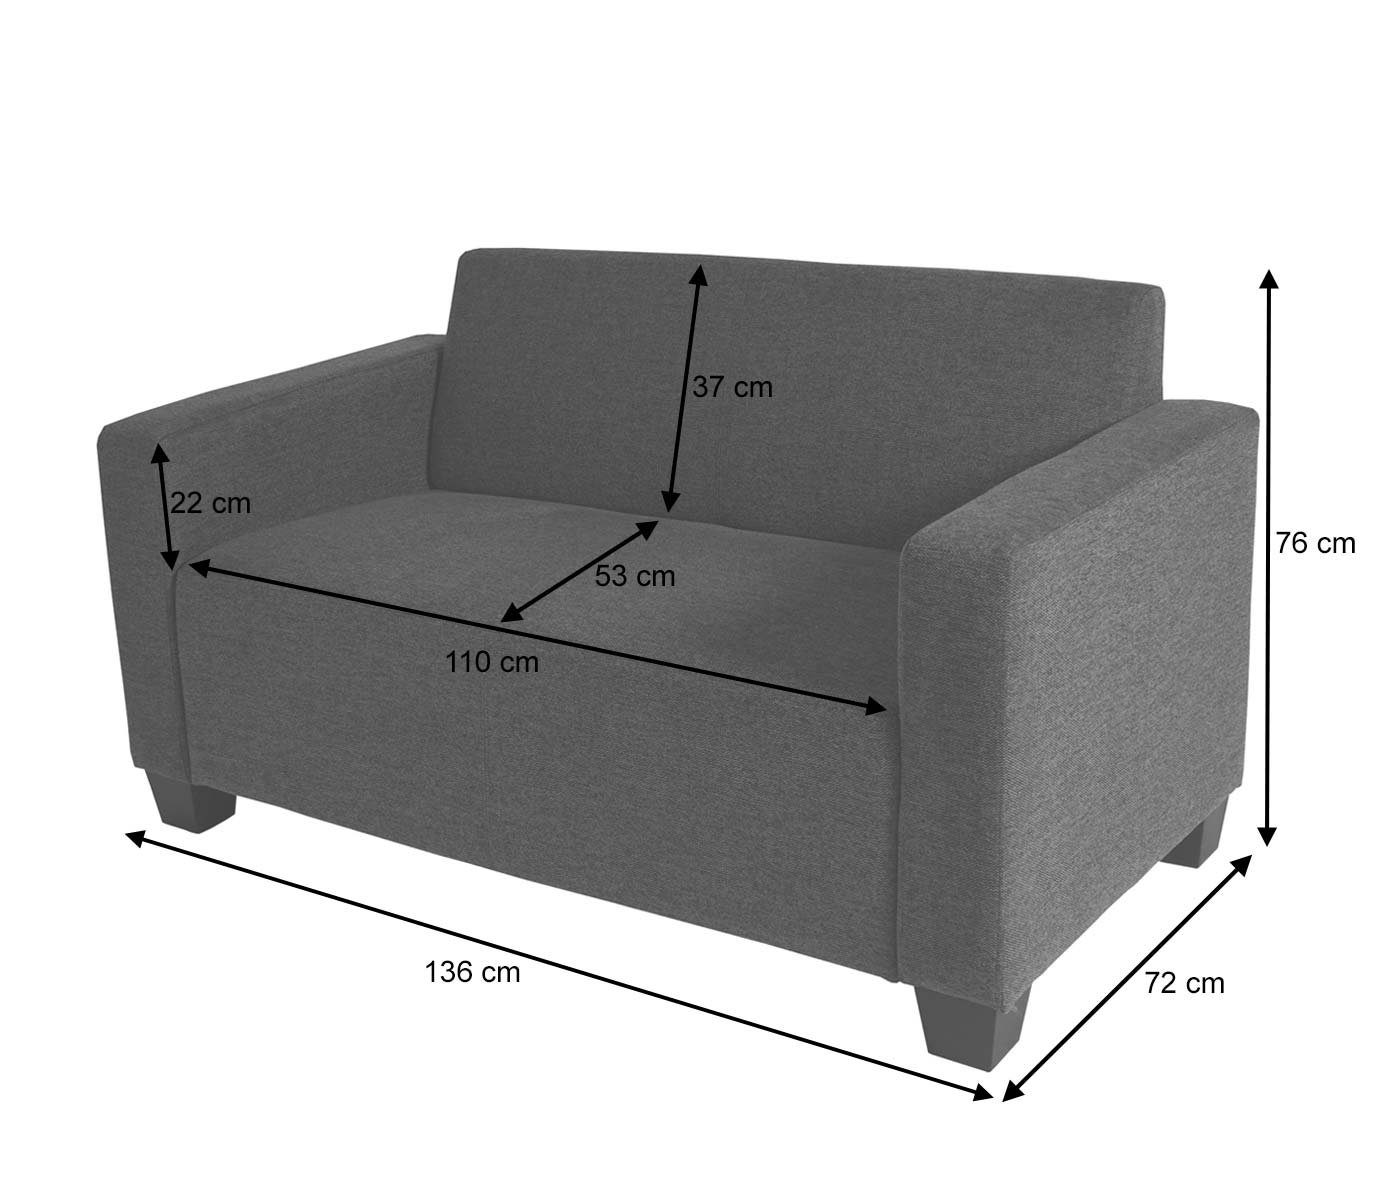 MCW Sofa Moncalieri-2-2er, Moderner Bequeme Lounge-Stil, pro Sofa 2 260 Teile, 2er Maximal grau grau | kg Sitzpolsterung